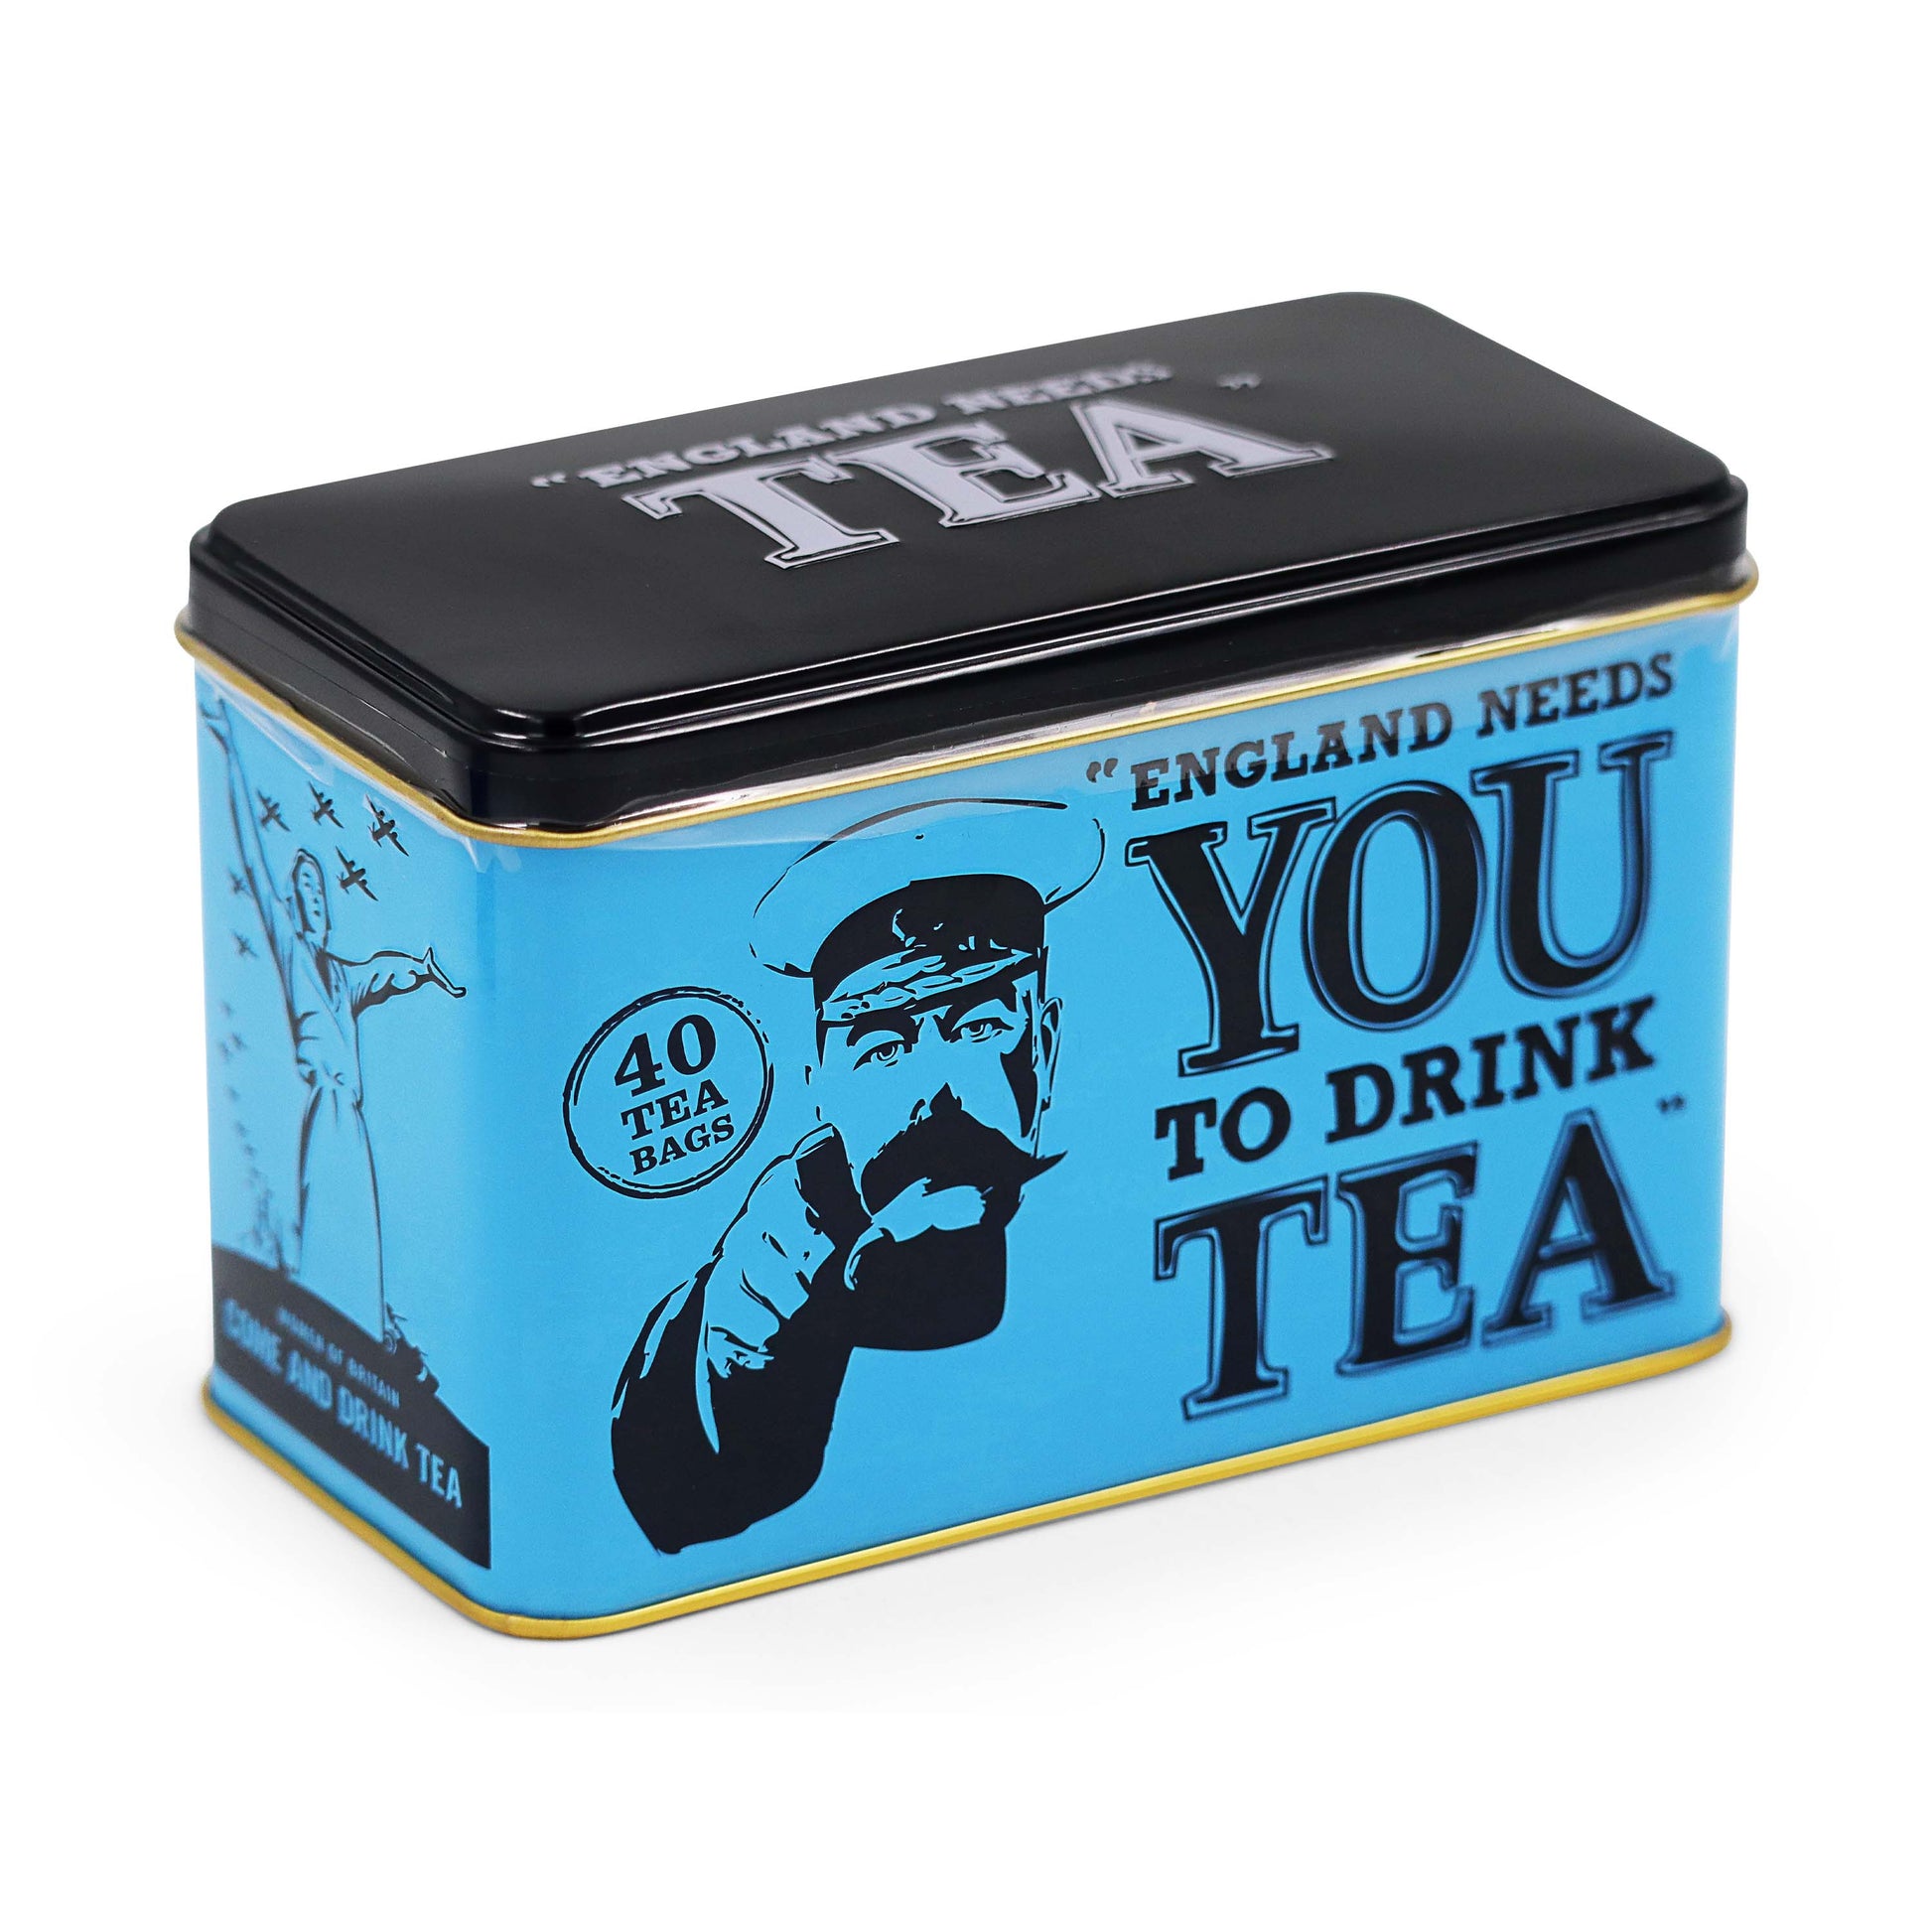 England Needs You To Drink Tea!